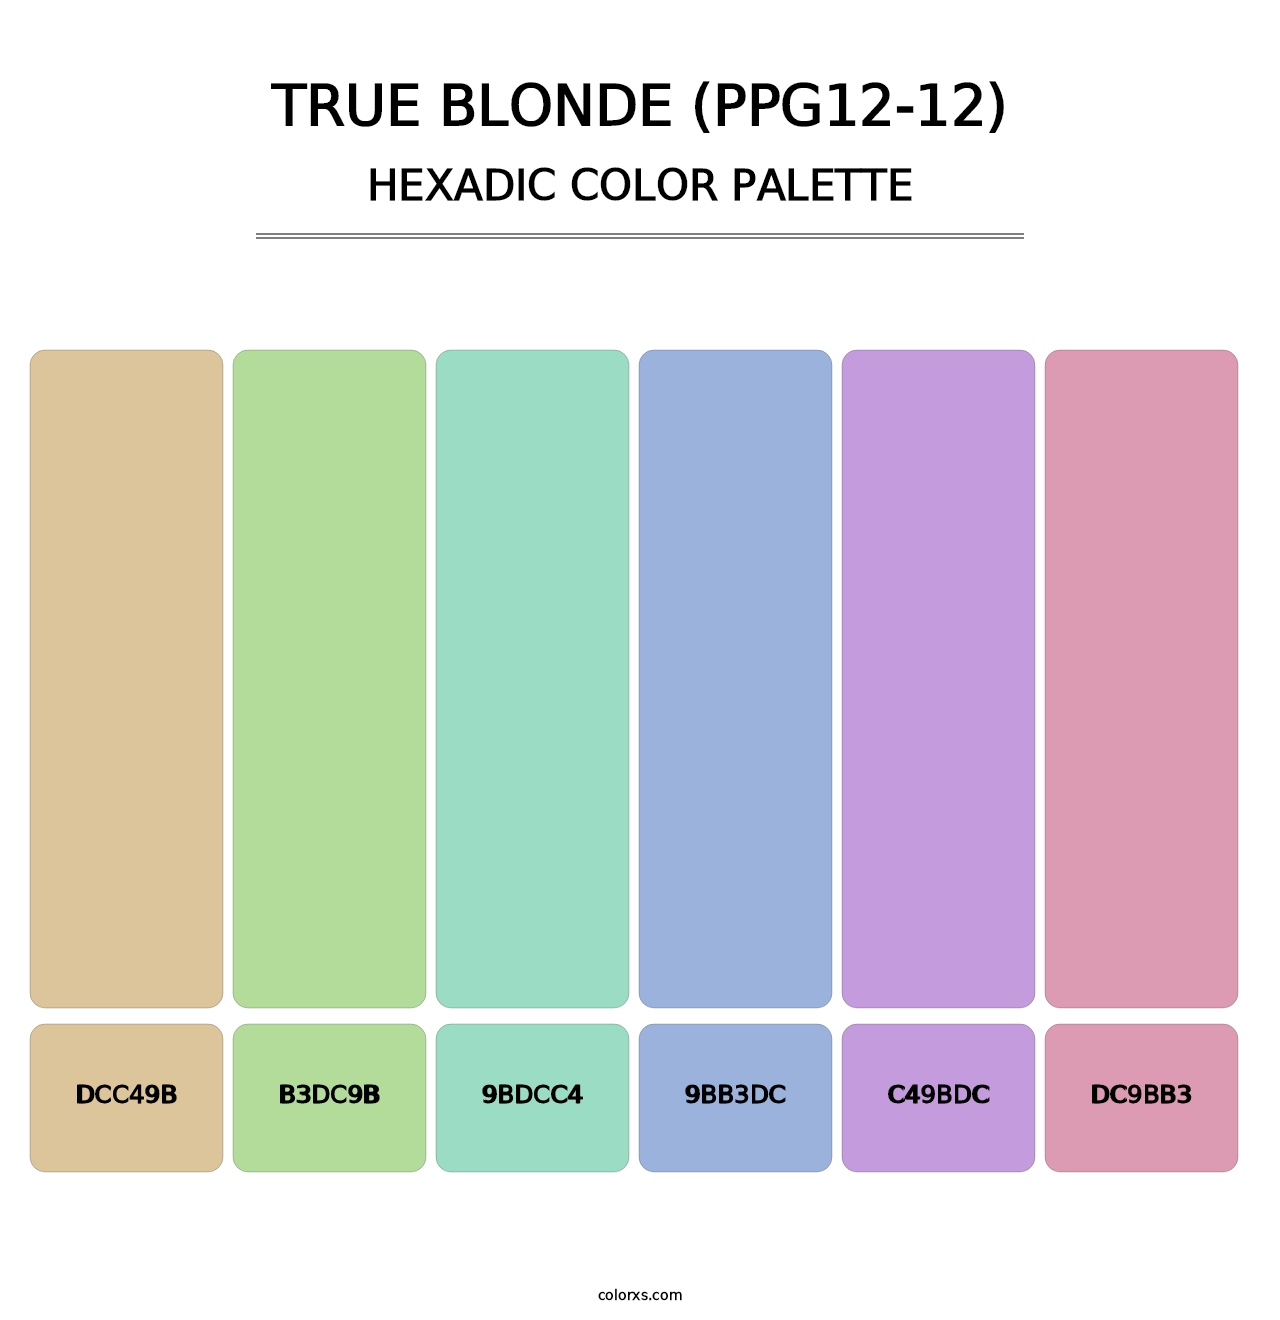 True Blonde (PPG12-12) - Hexadic Color Palette